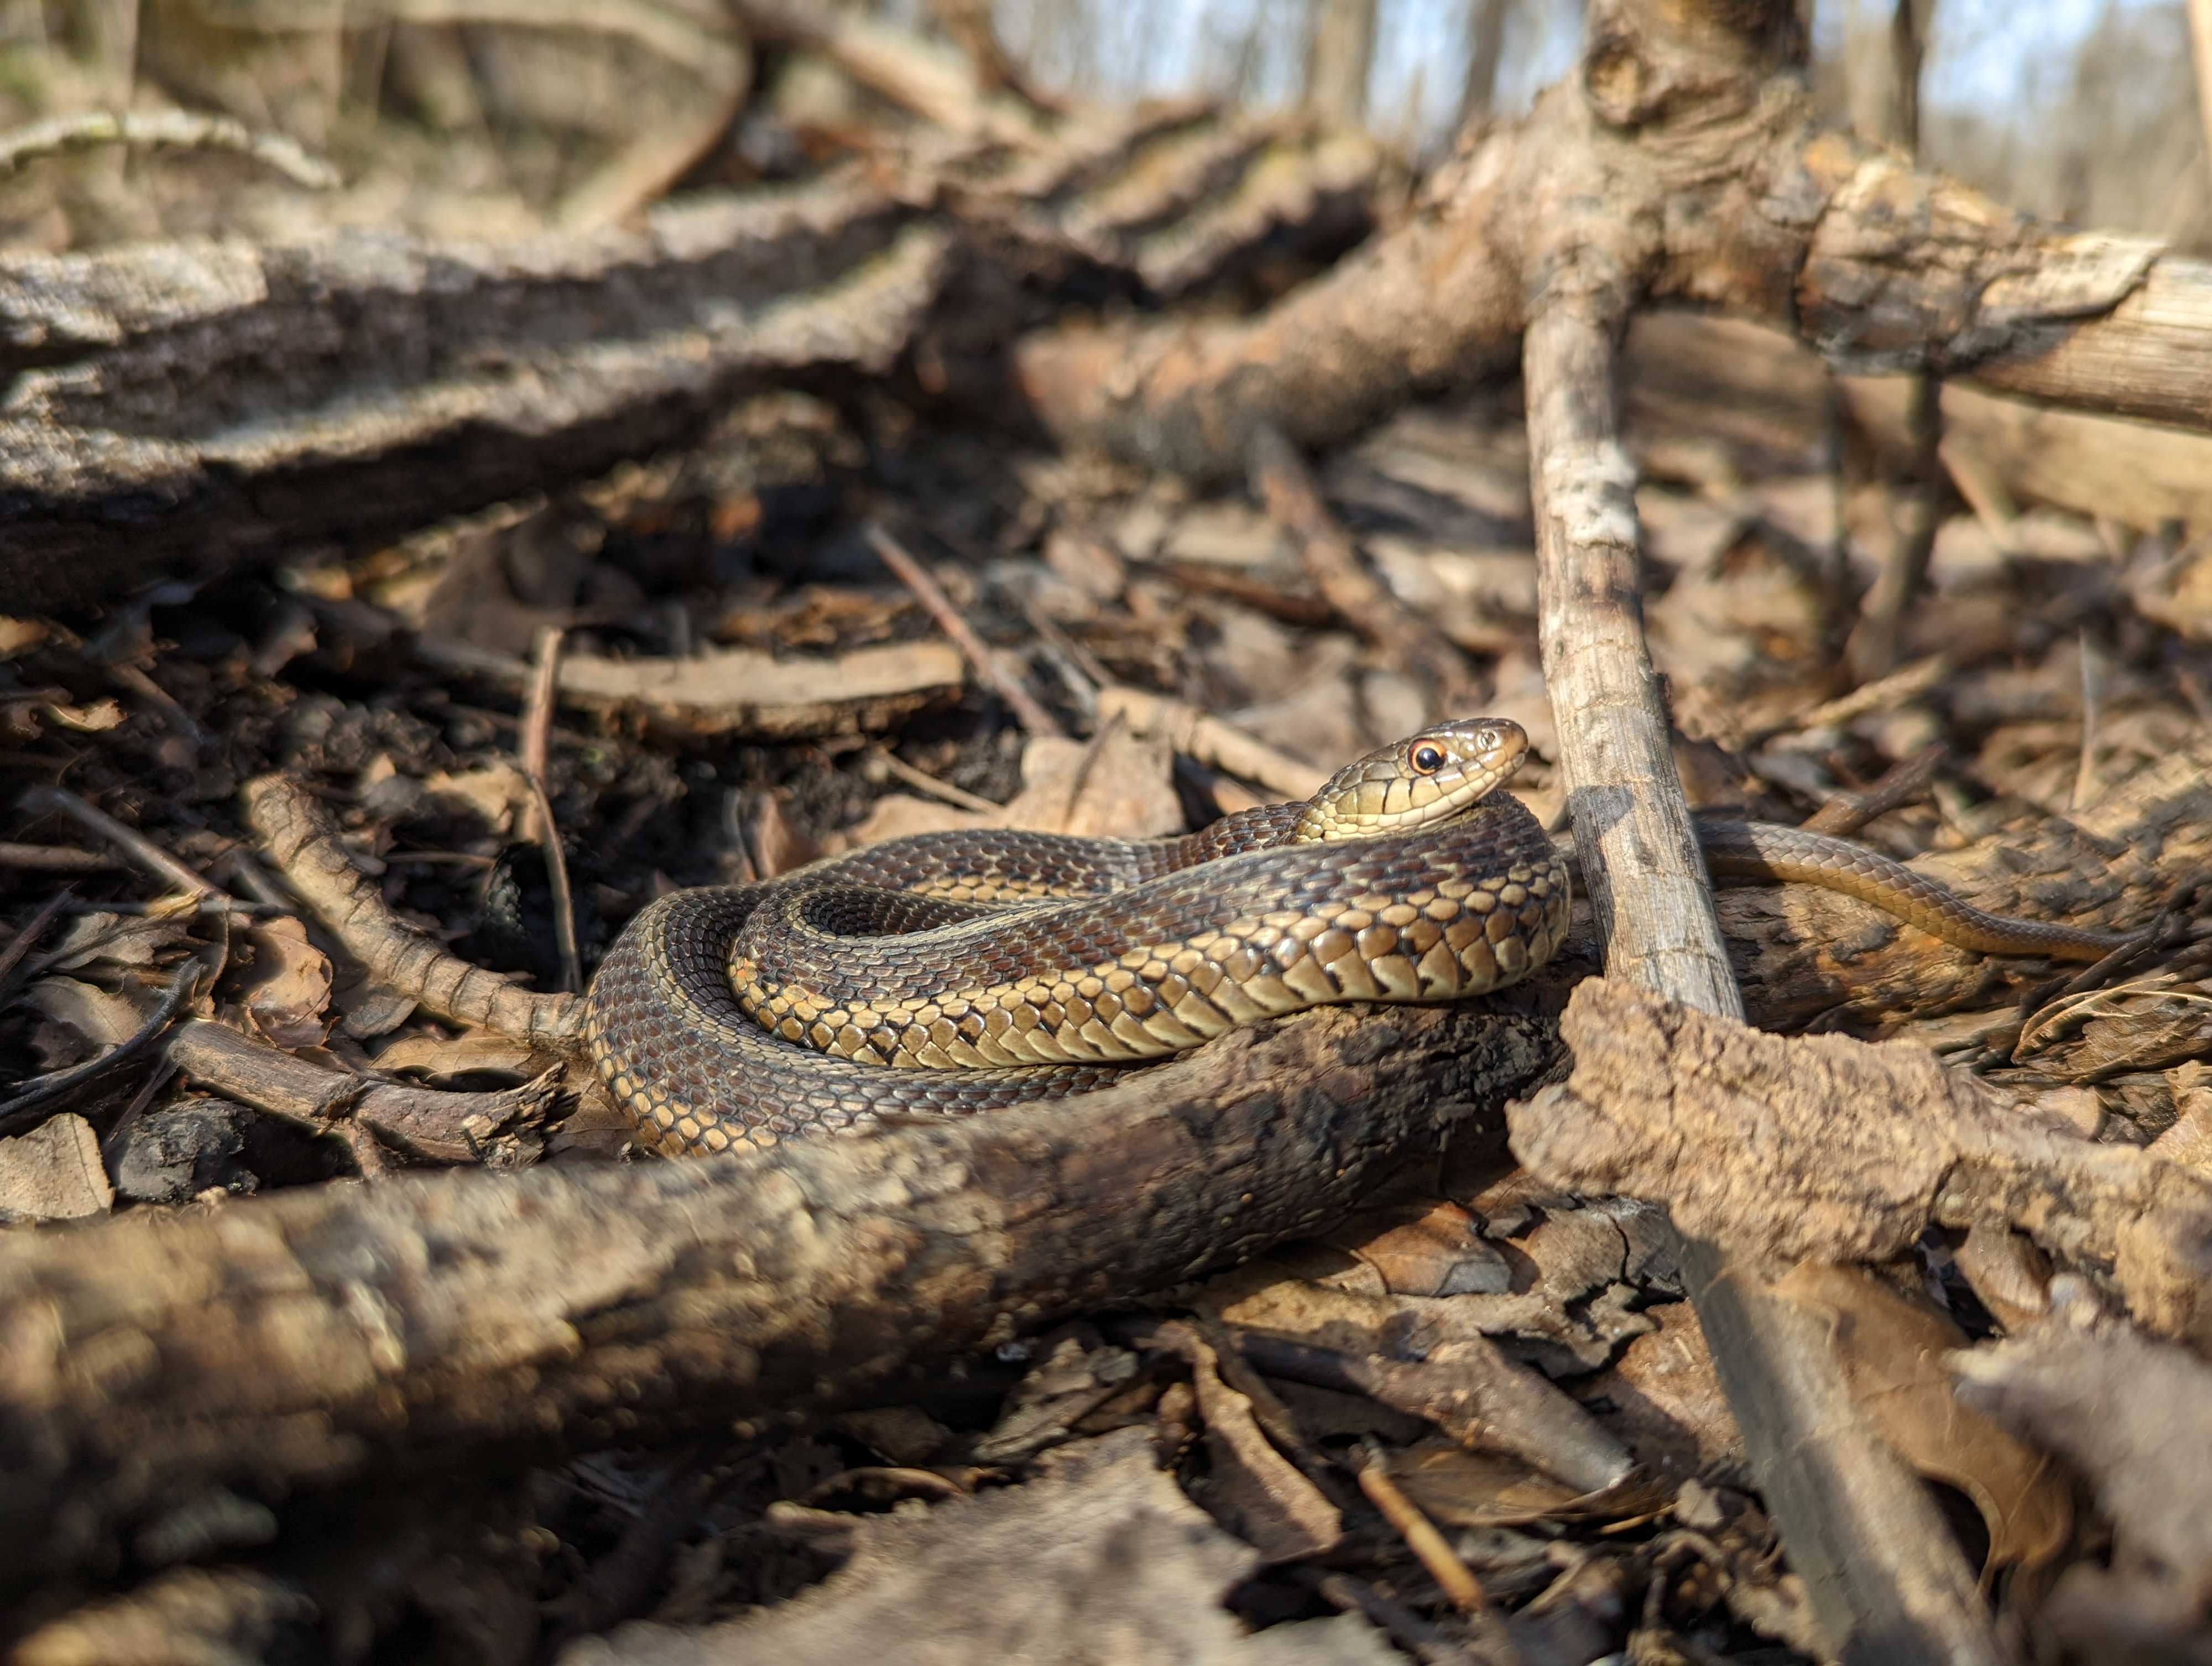 A garter snake at Goodenow Grove